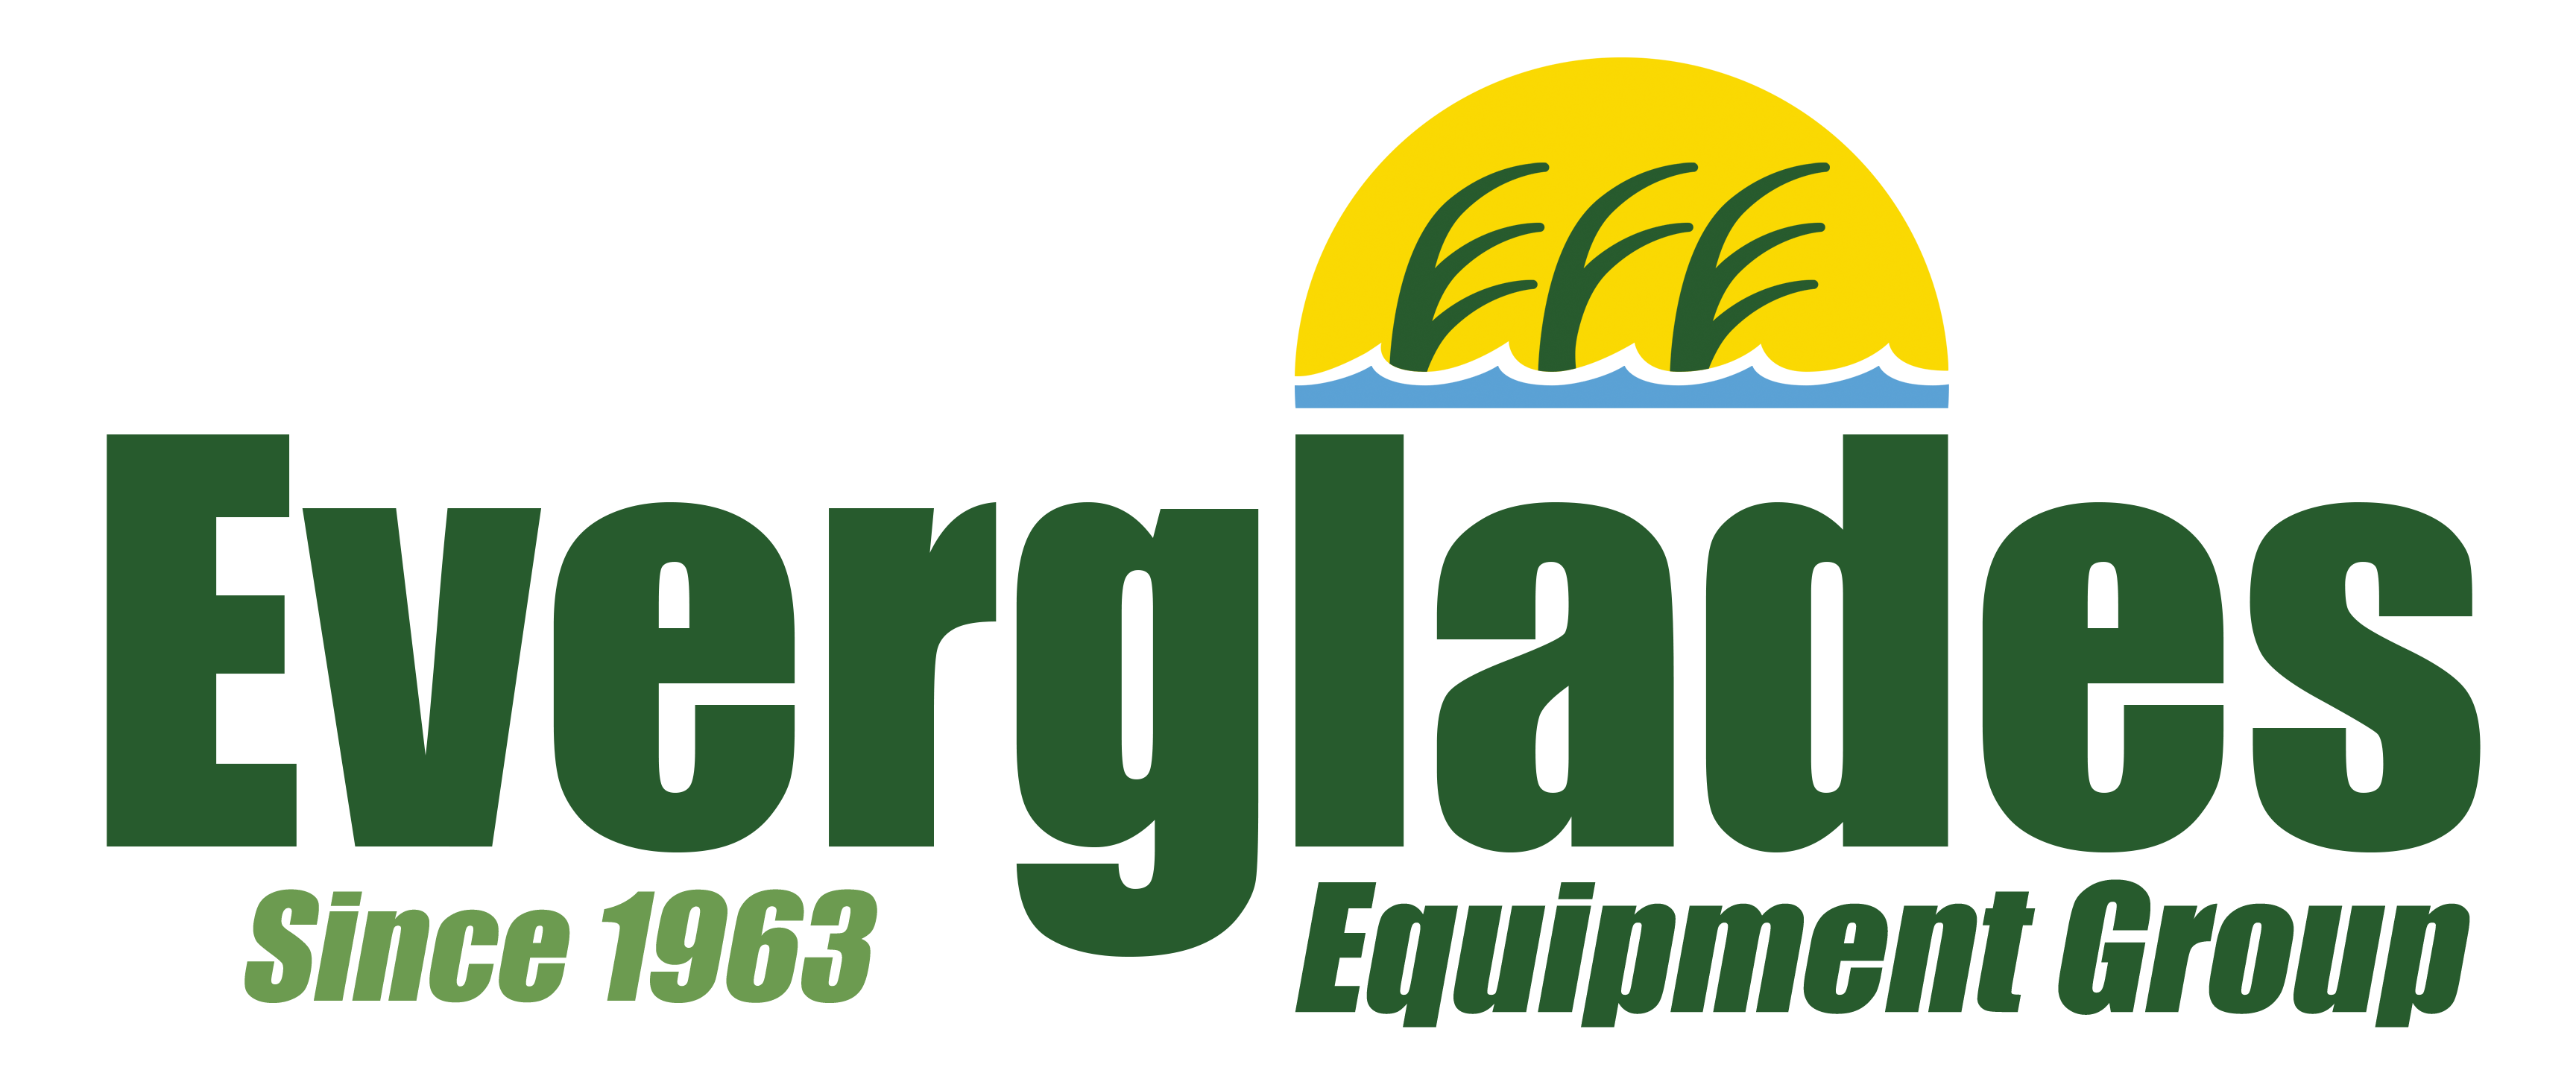 Everglades Logo - Everglades Logo Final - PNG - Citrus Industry Magazine